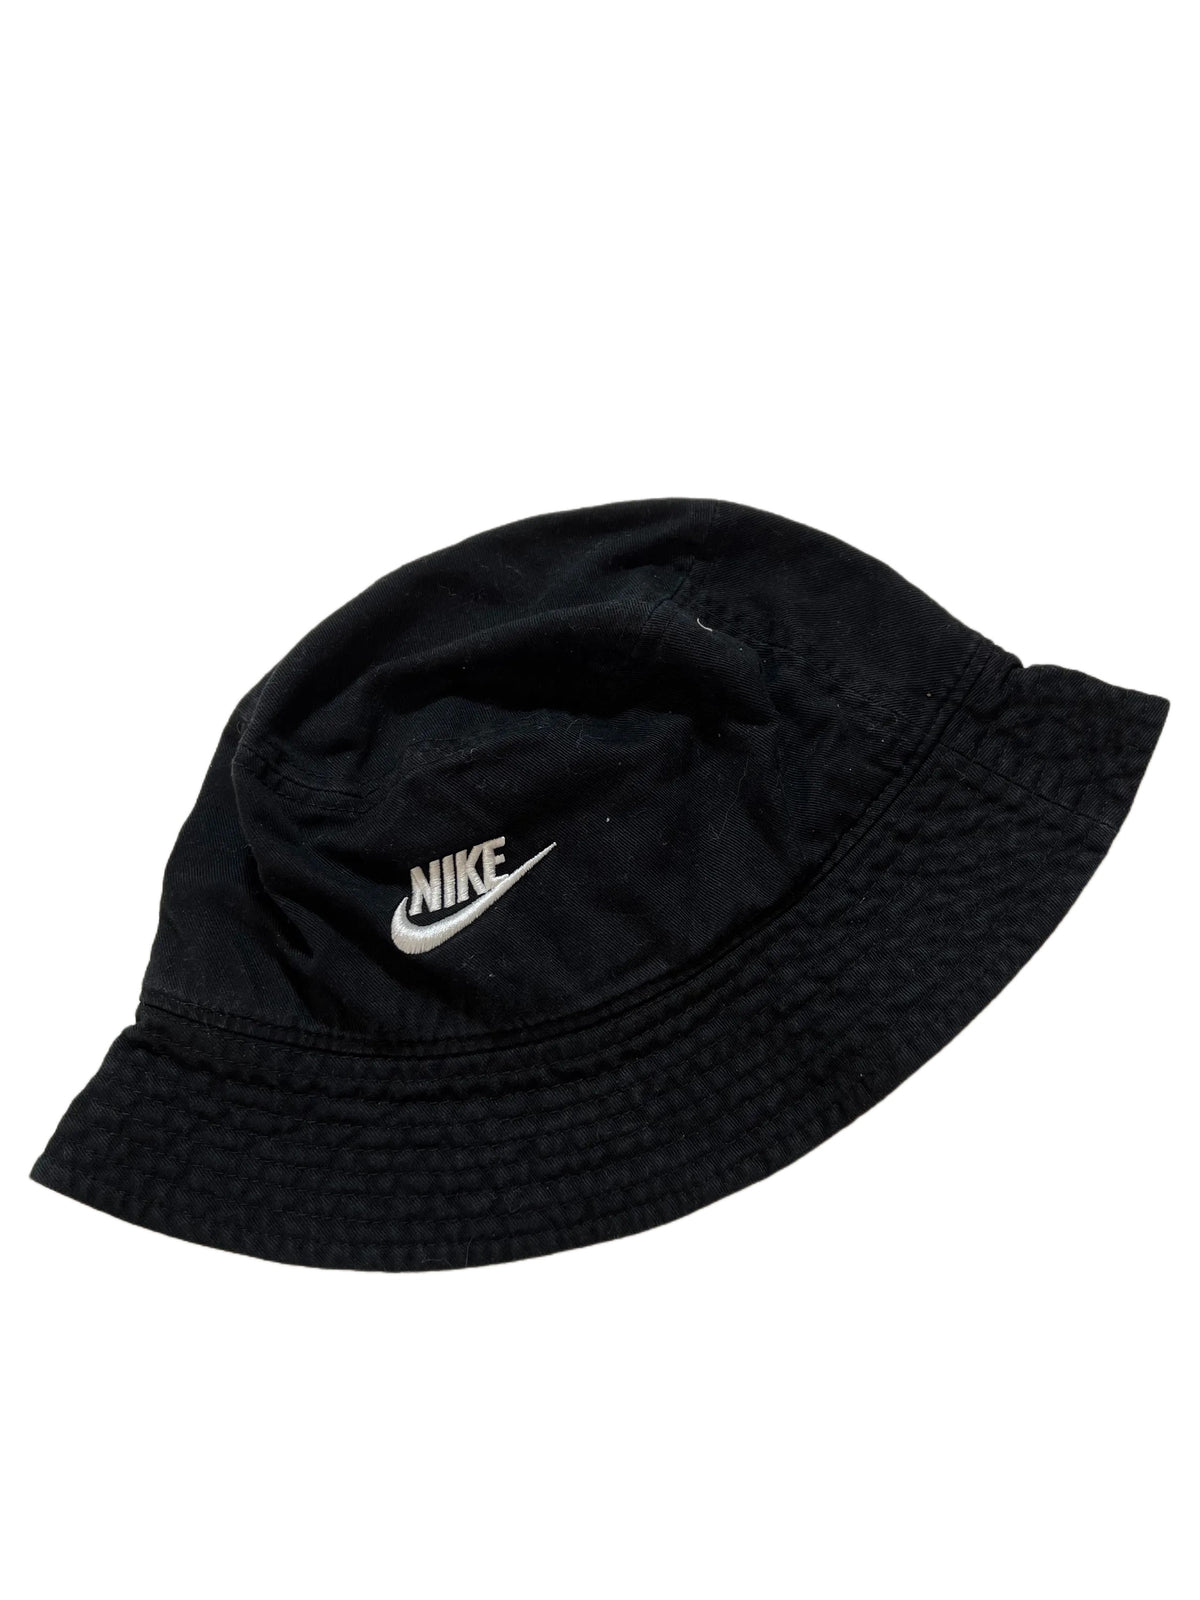 Nike- Black Bucket Hat